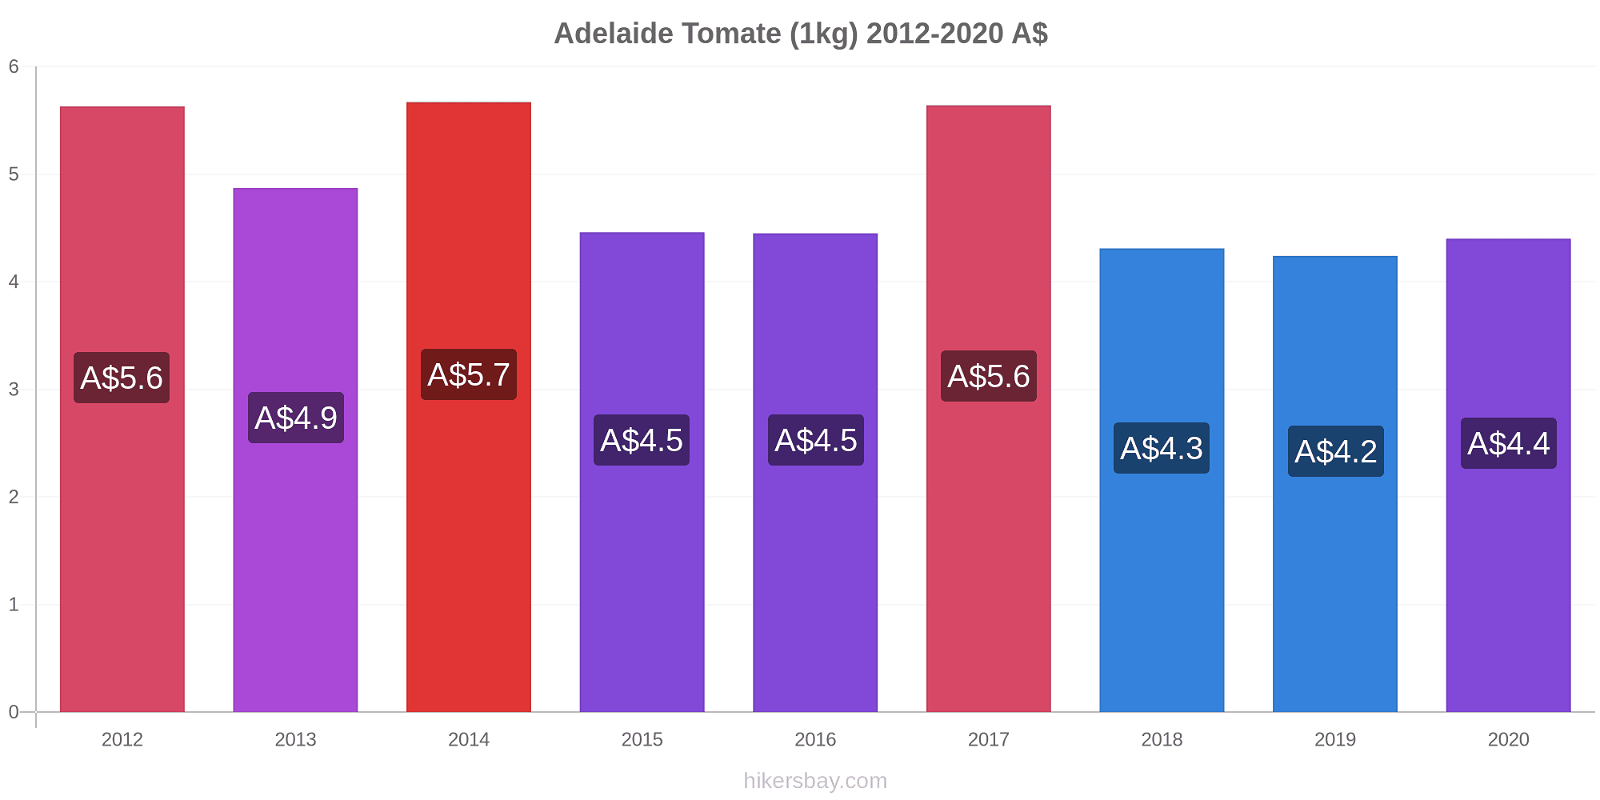 Adelaide Preisänderungen Tomaten (1kg) hikersbay.com